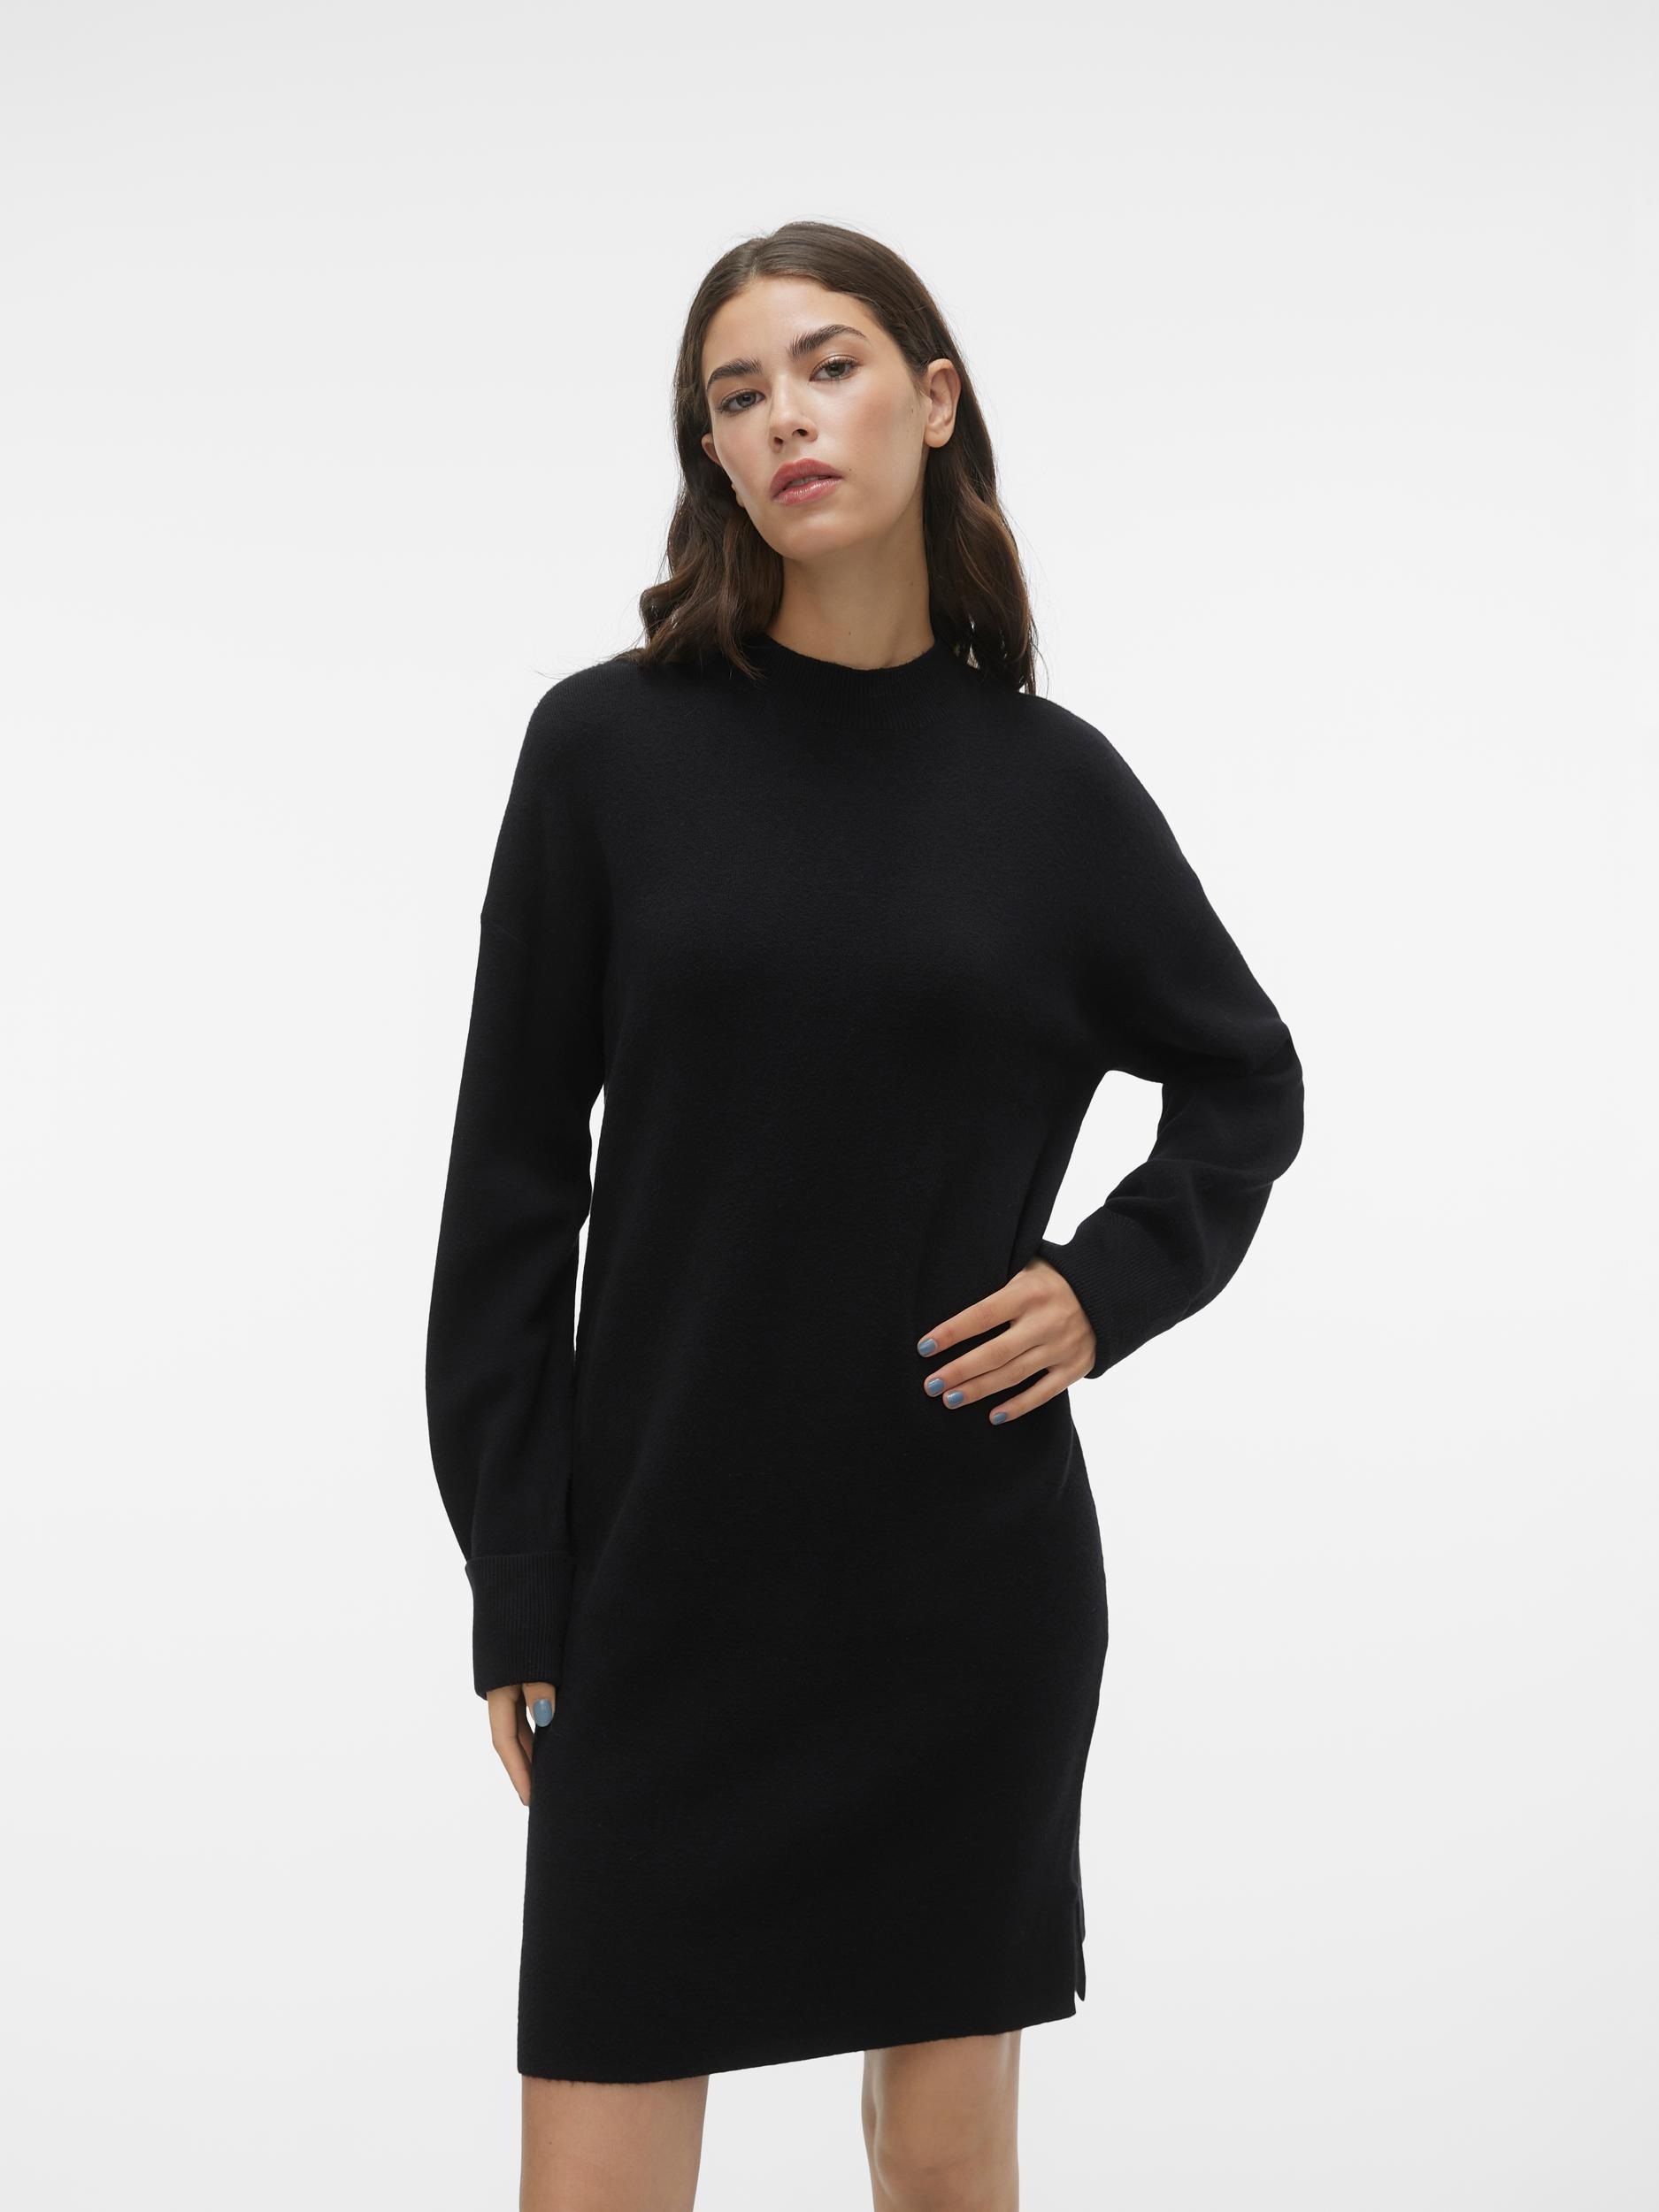 HIGHNECK im LS Online OTTO DRESS« Shop Strickkleid Moda SHORT »VMGOLDNEEDLE Vero